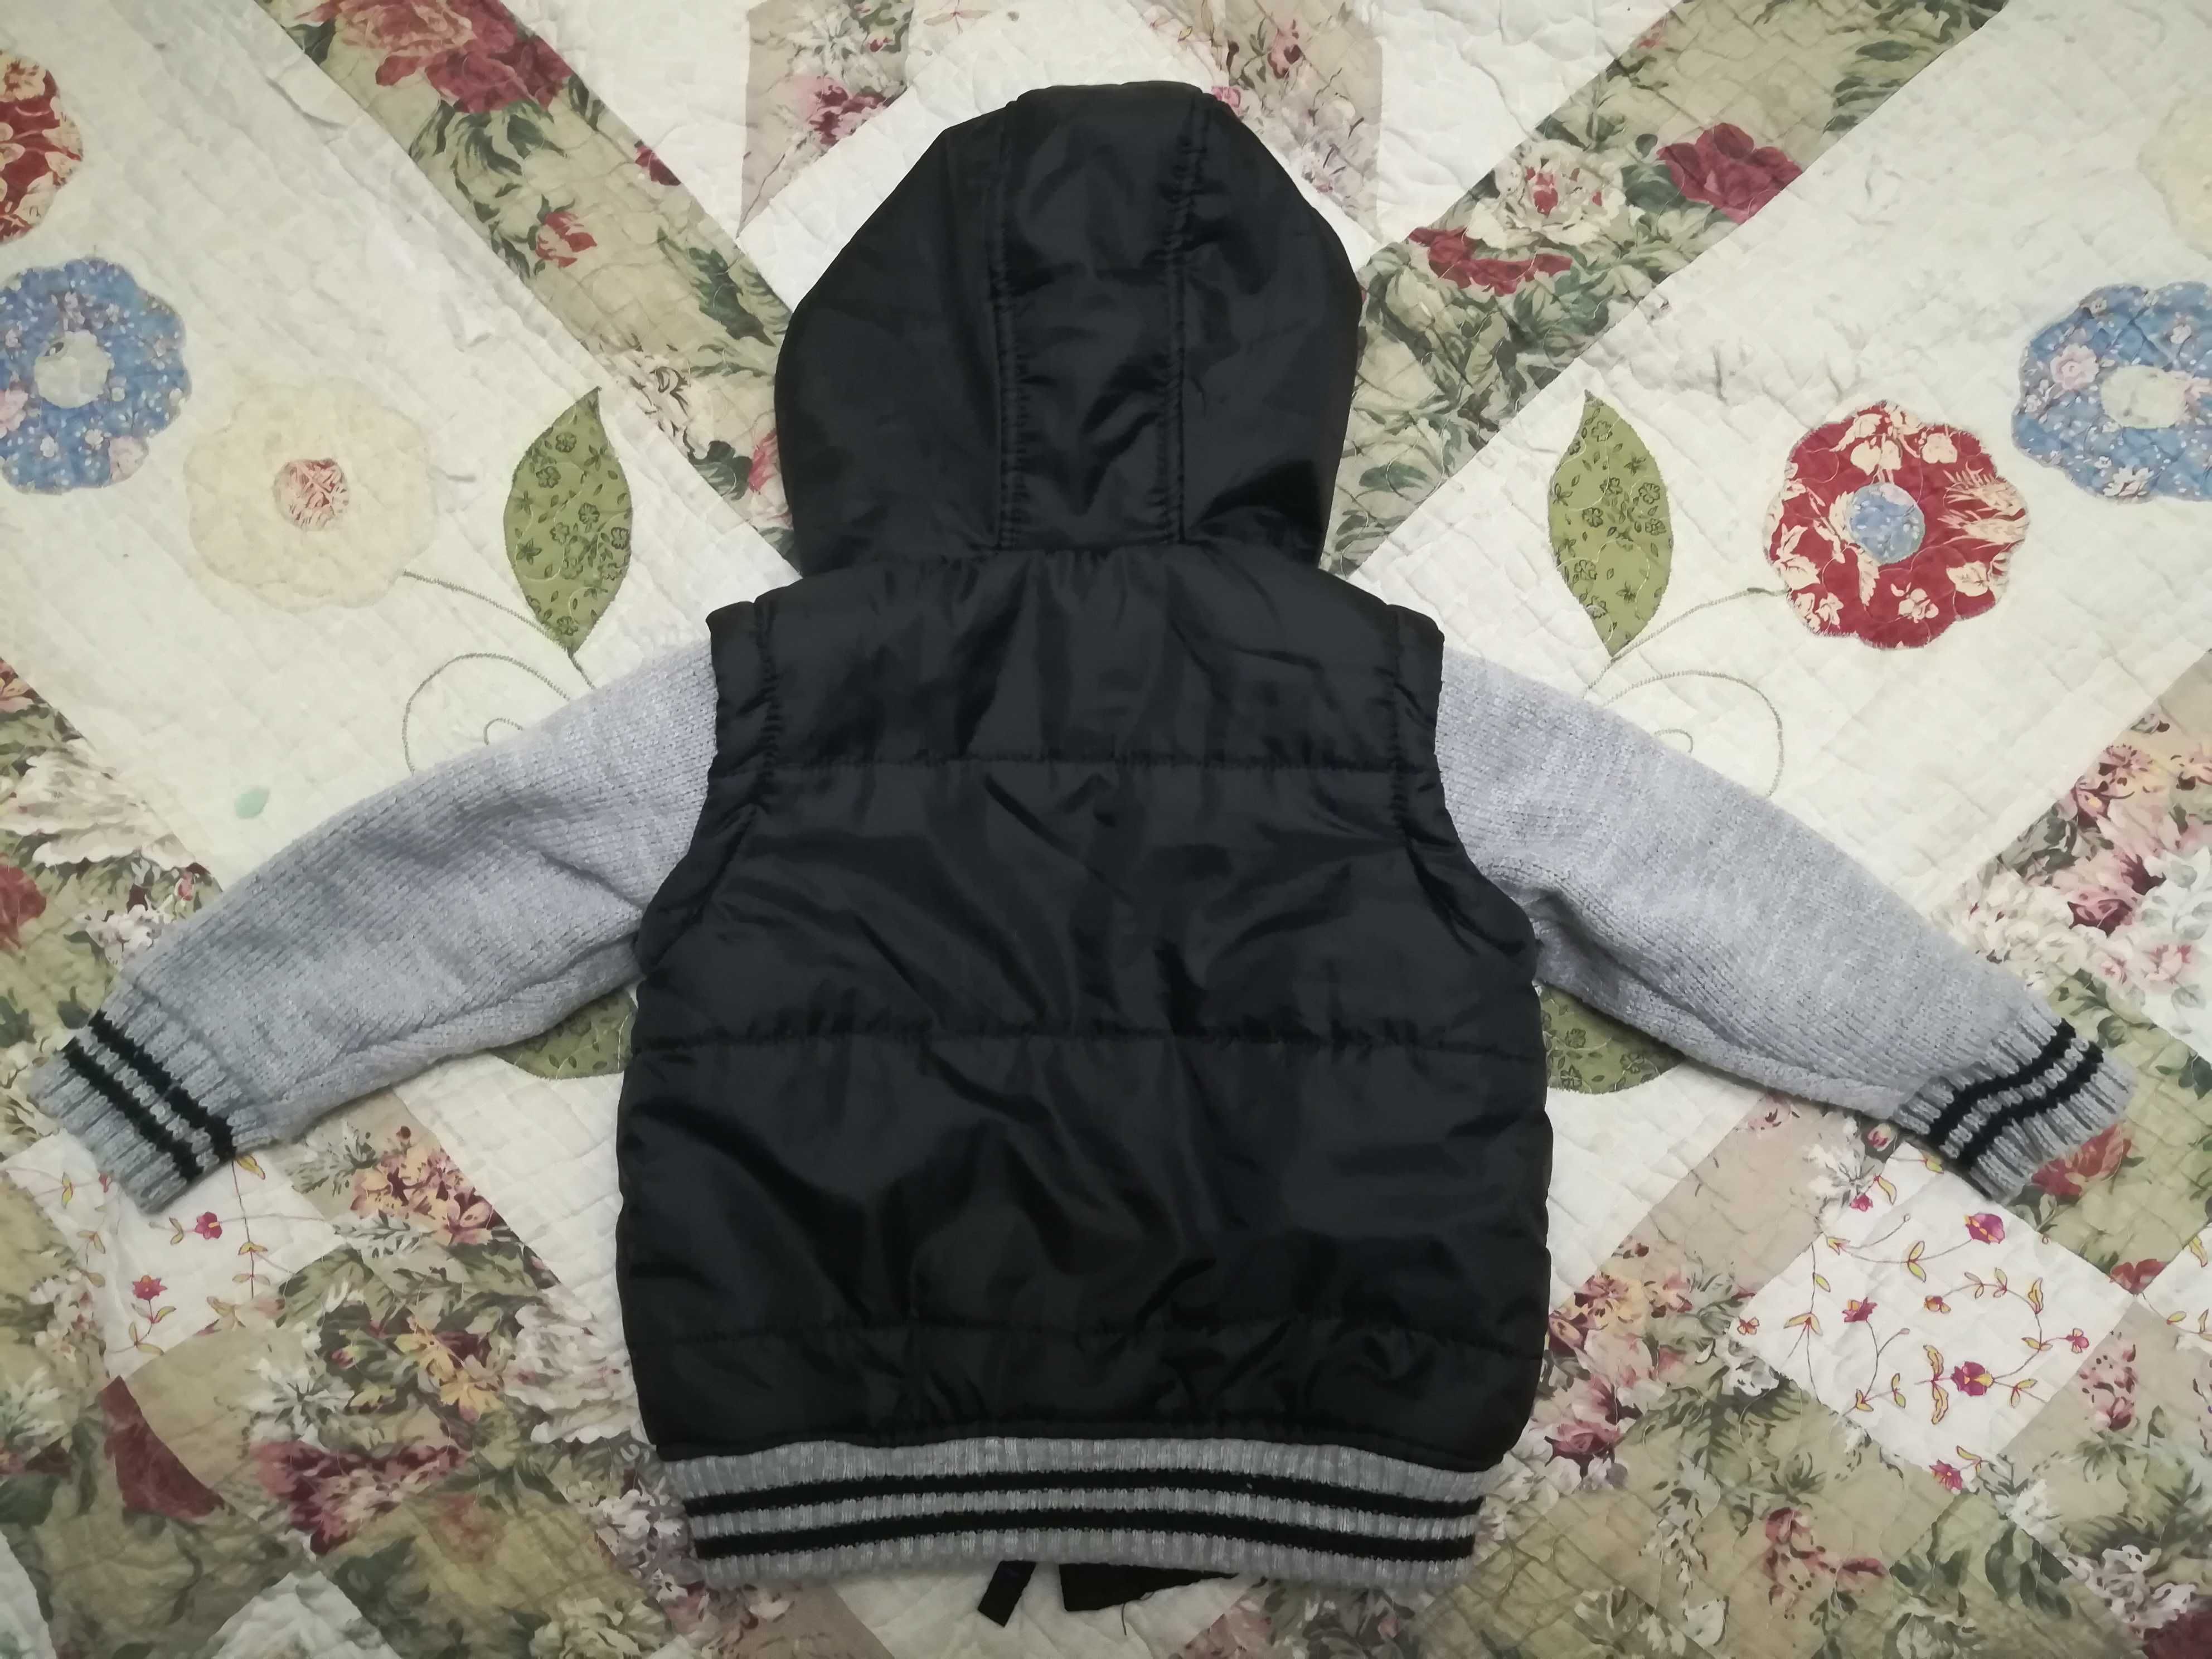 Детская курточка George 9-12m